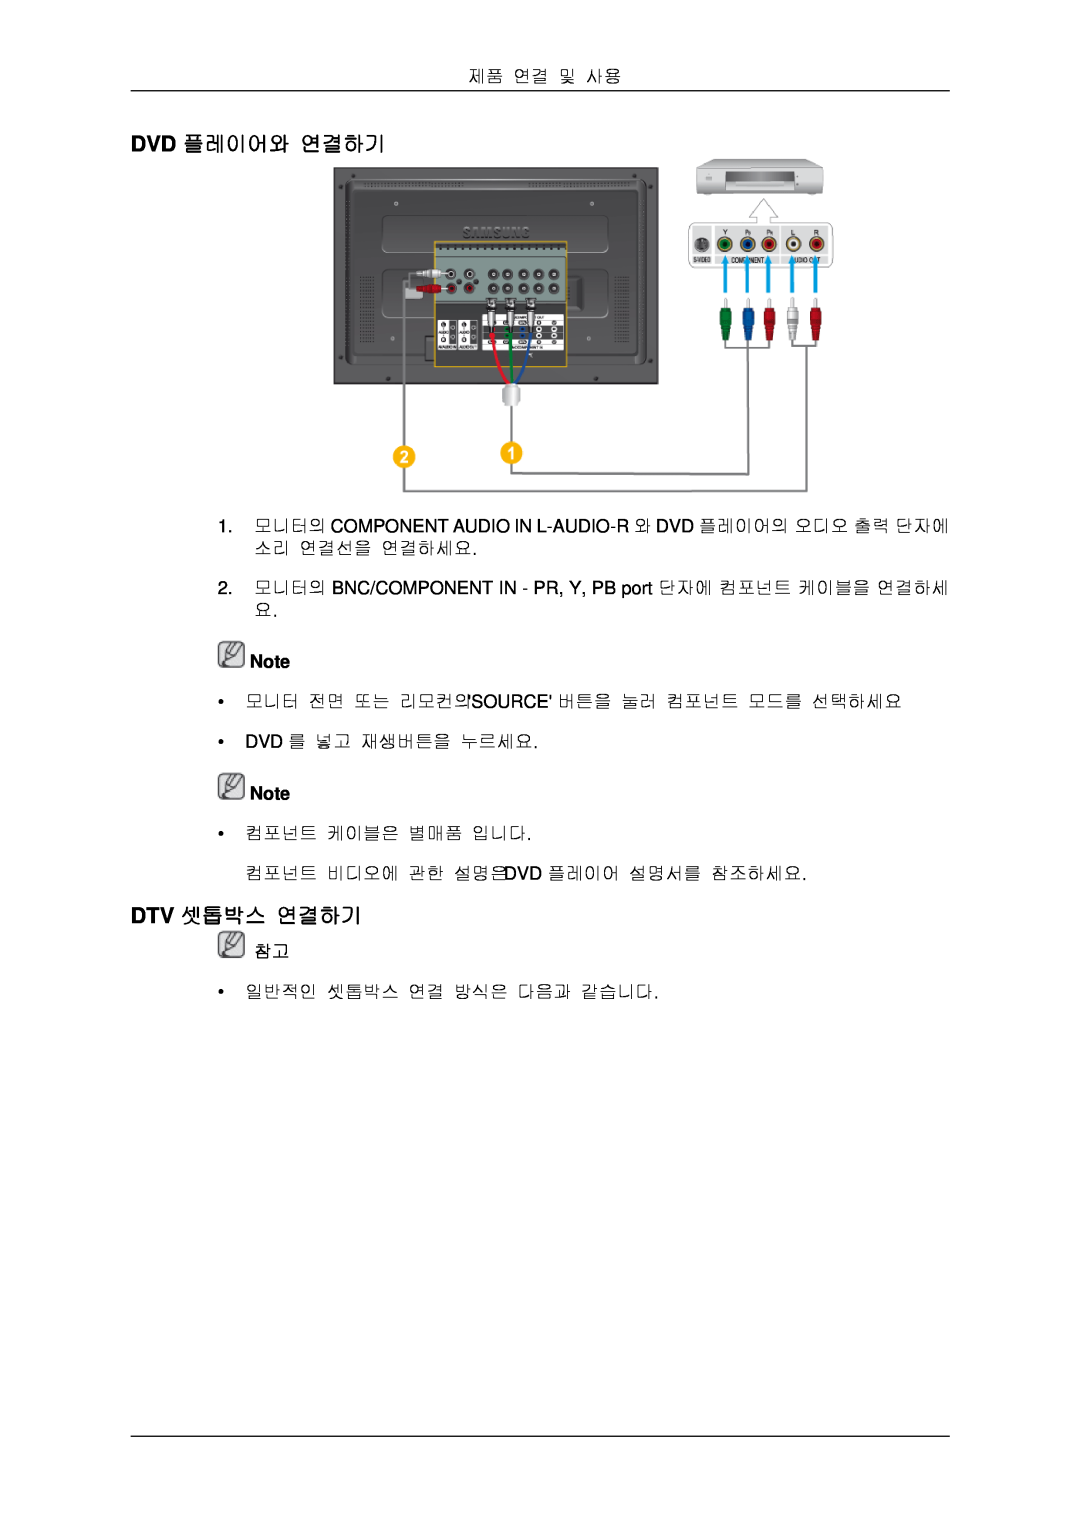 Samsung BN59-00806D-00 quick start Dvd 플레이어와 연결하기, Dtv 셋톱박스 연결하기 